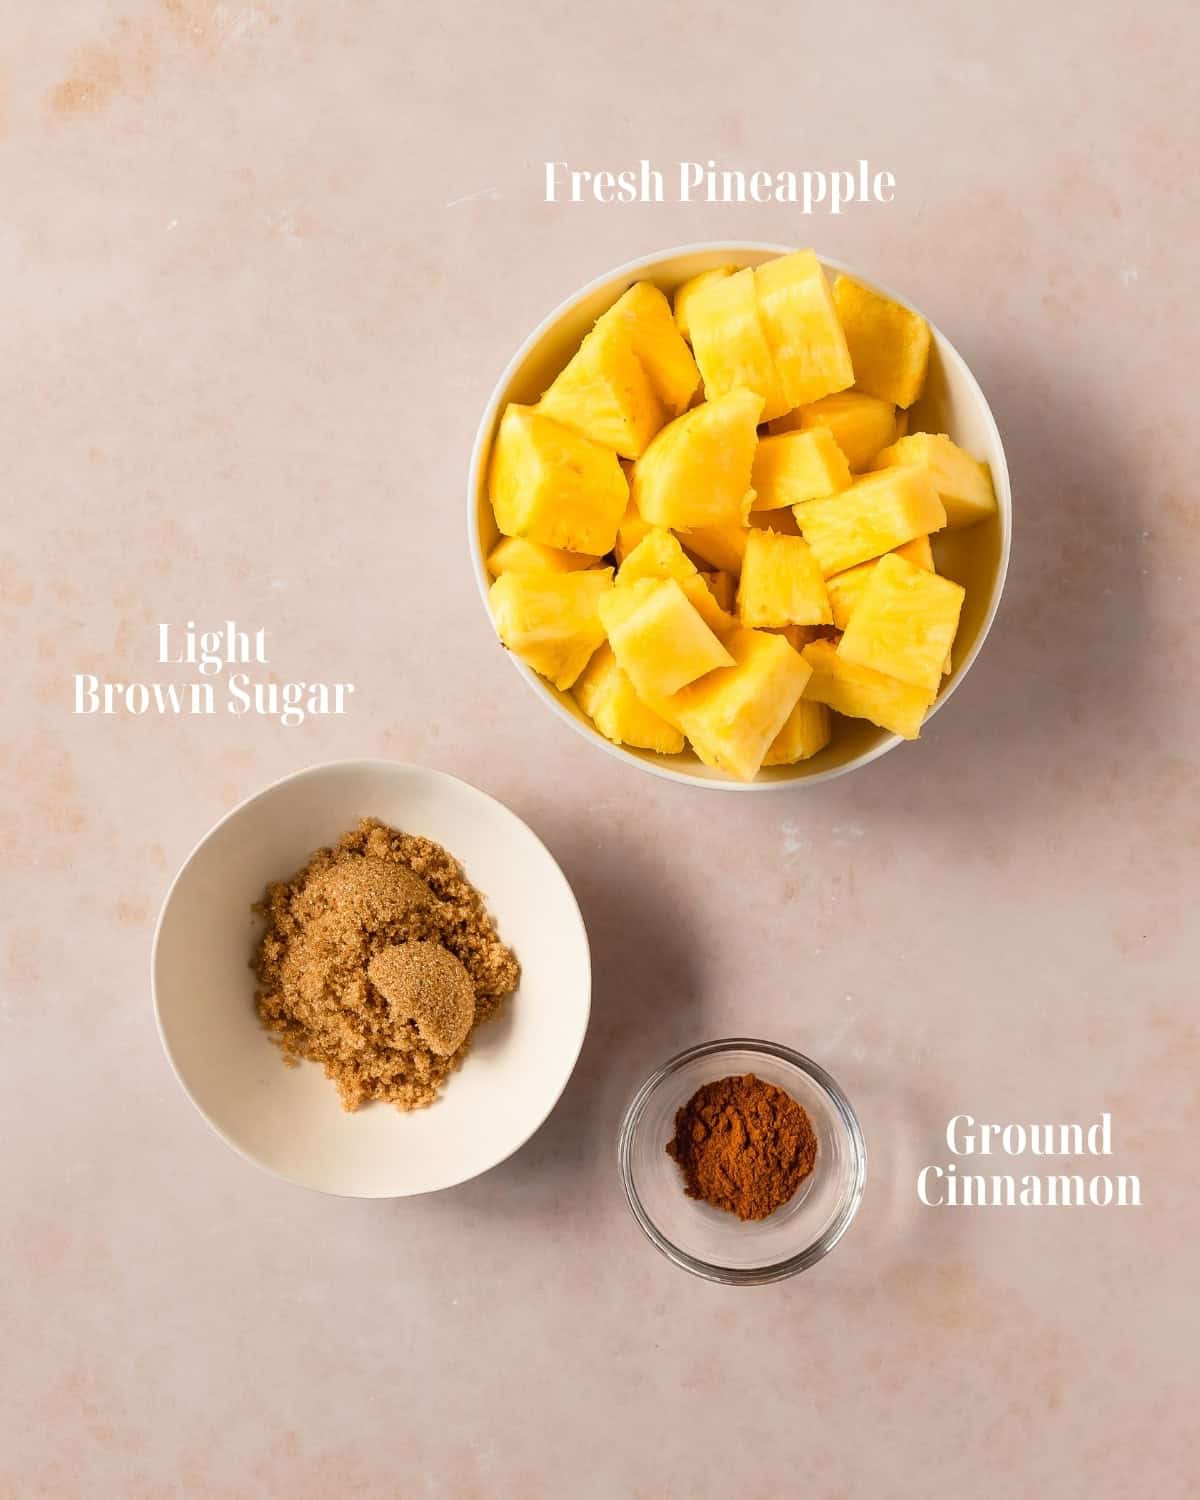 Gather fresh pineapple, light brown sugar and ground cinnamon.  